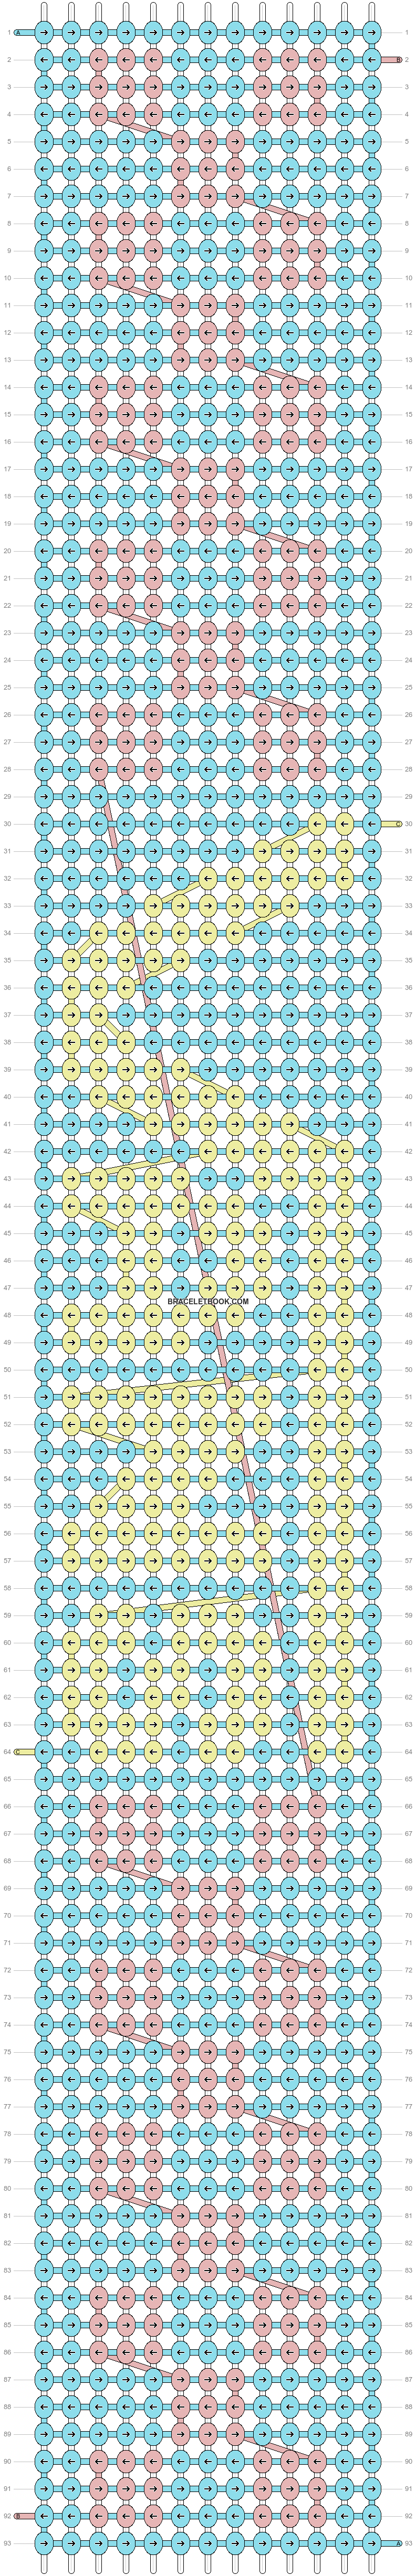 Alpha pattern #44004 variation #62664 pattern